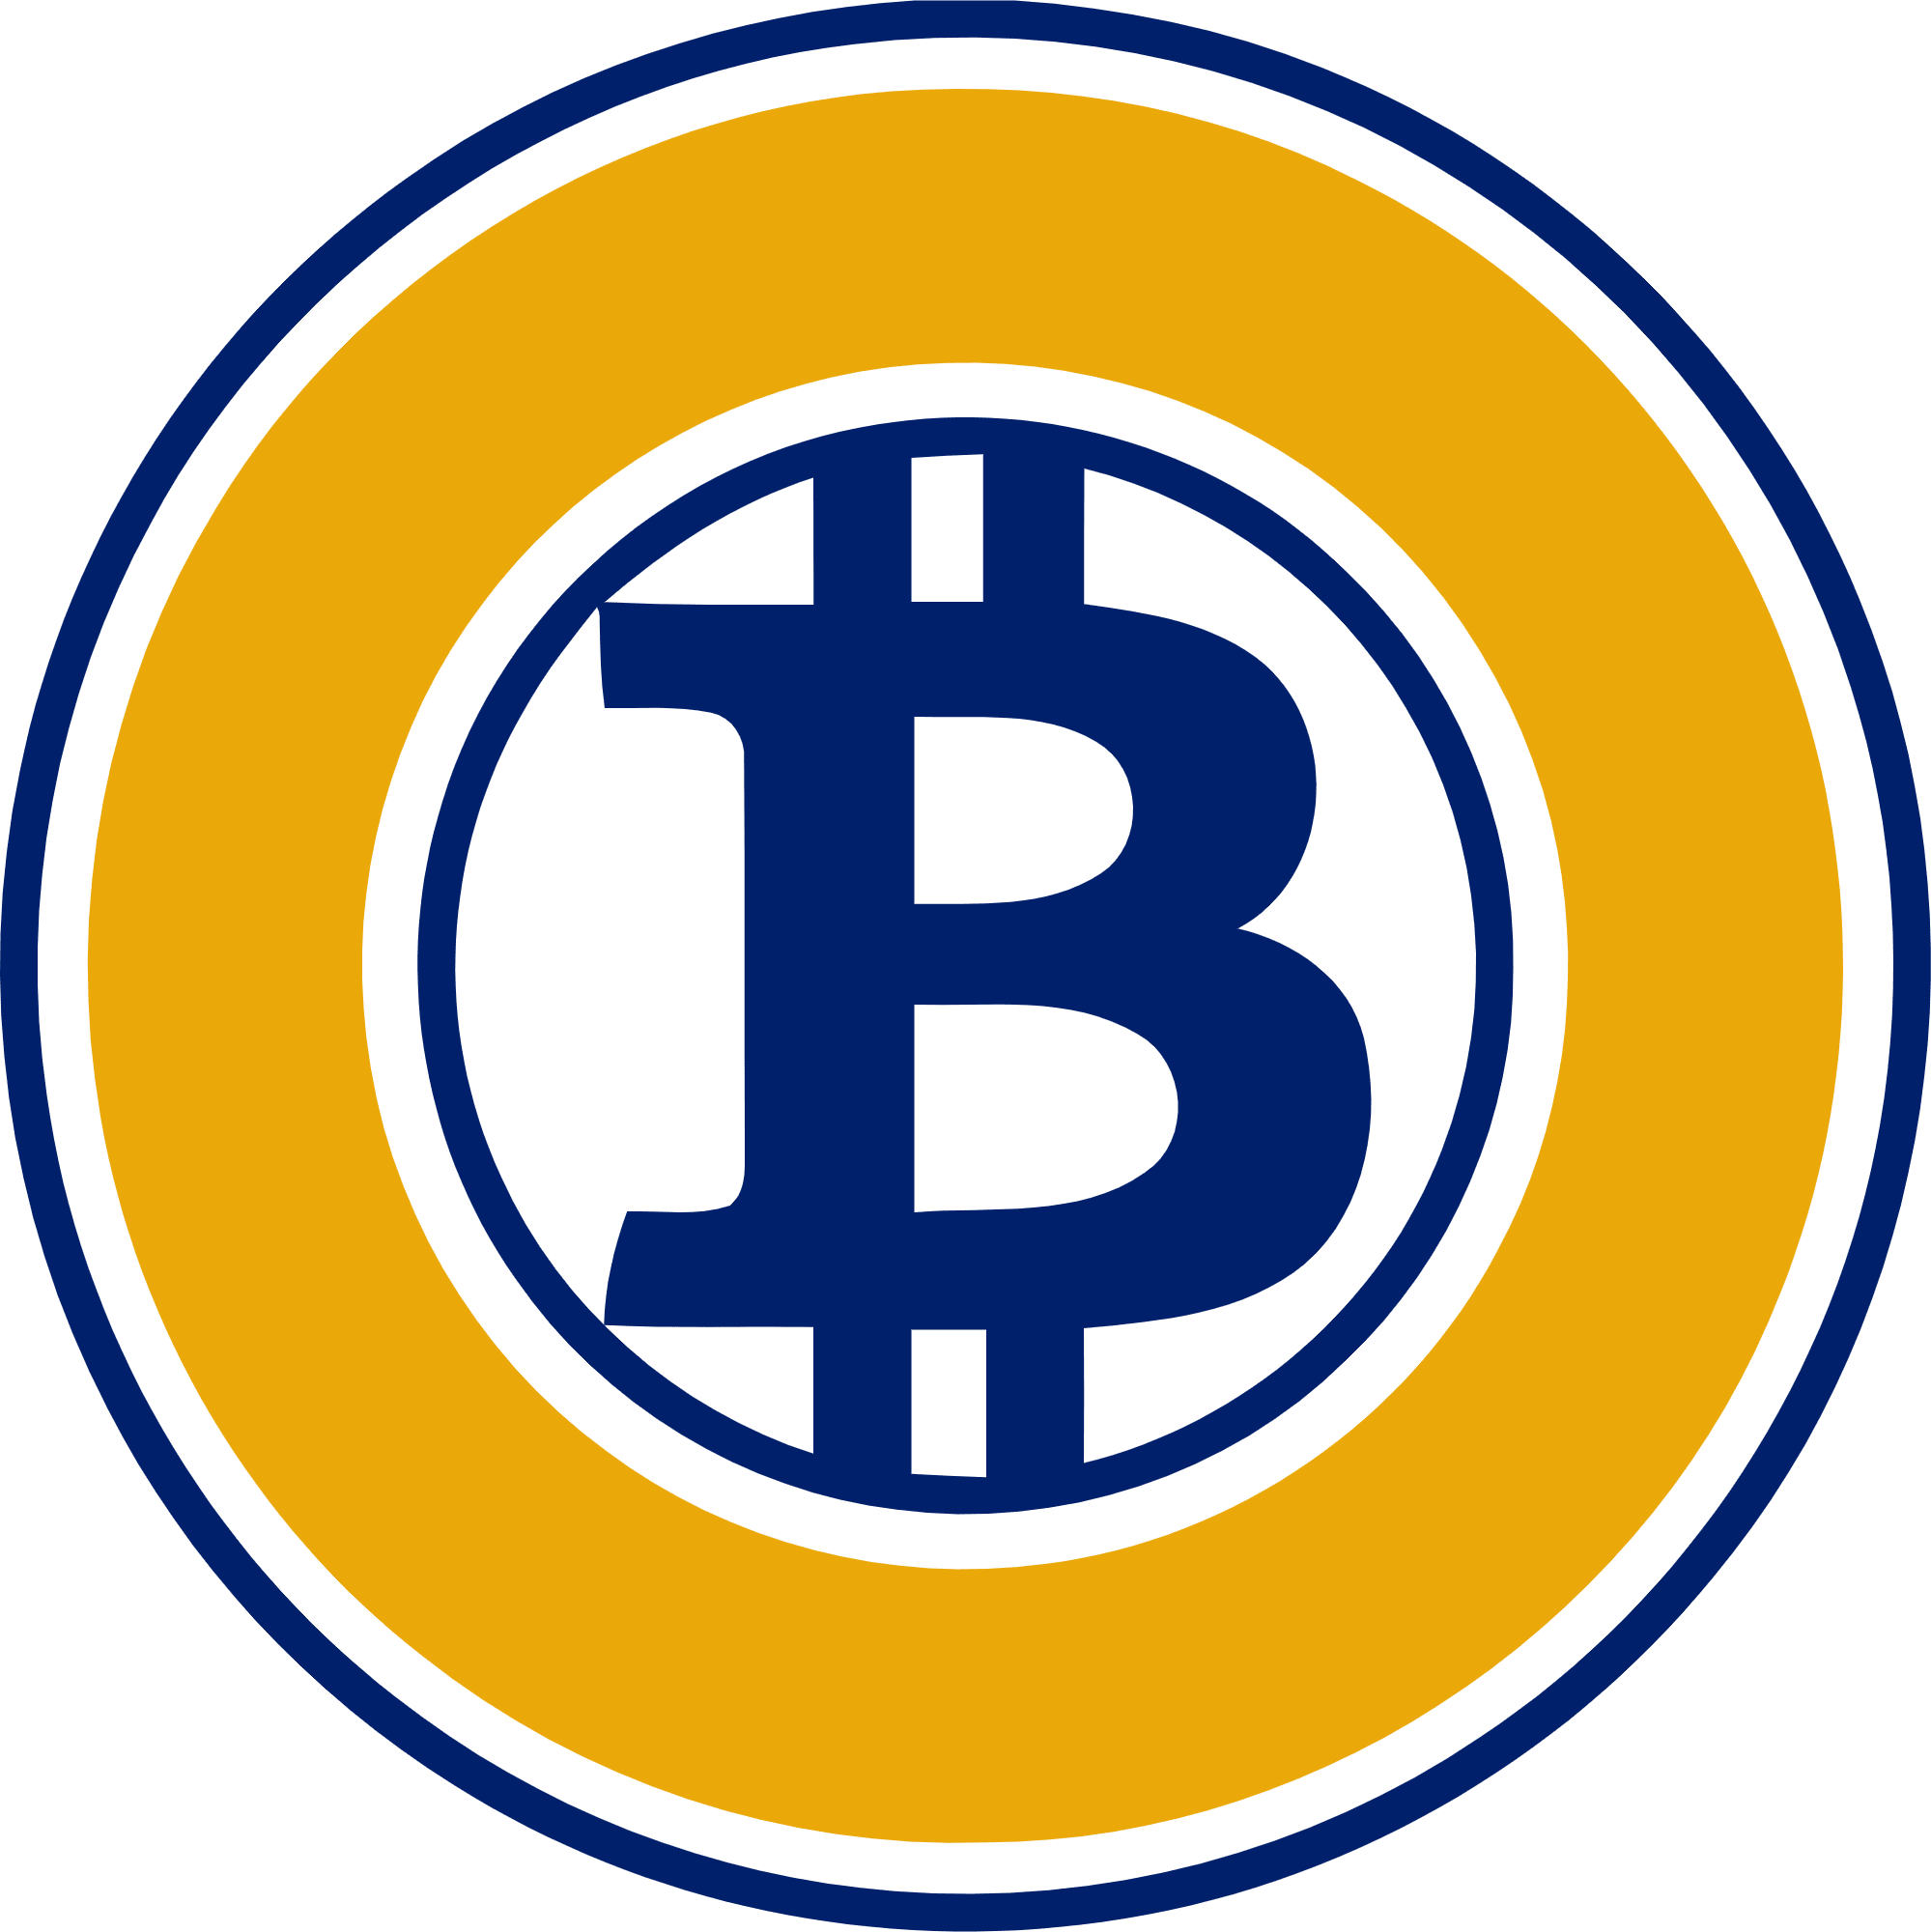 Bitcoin Gold logo in svg format